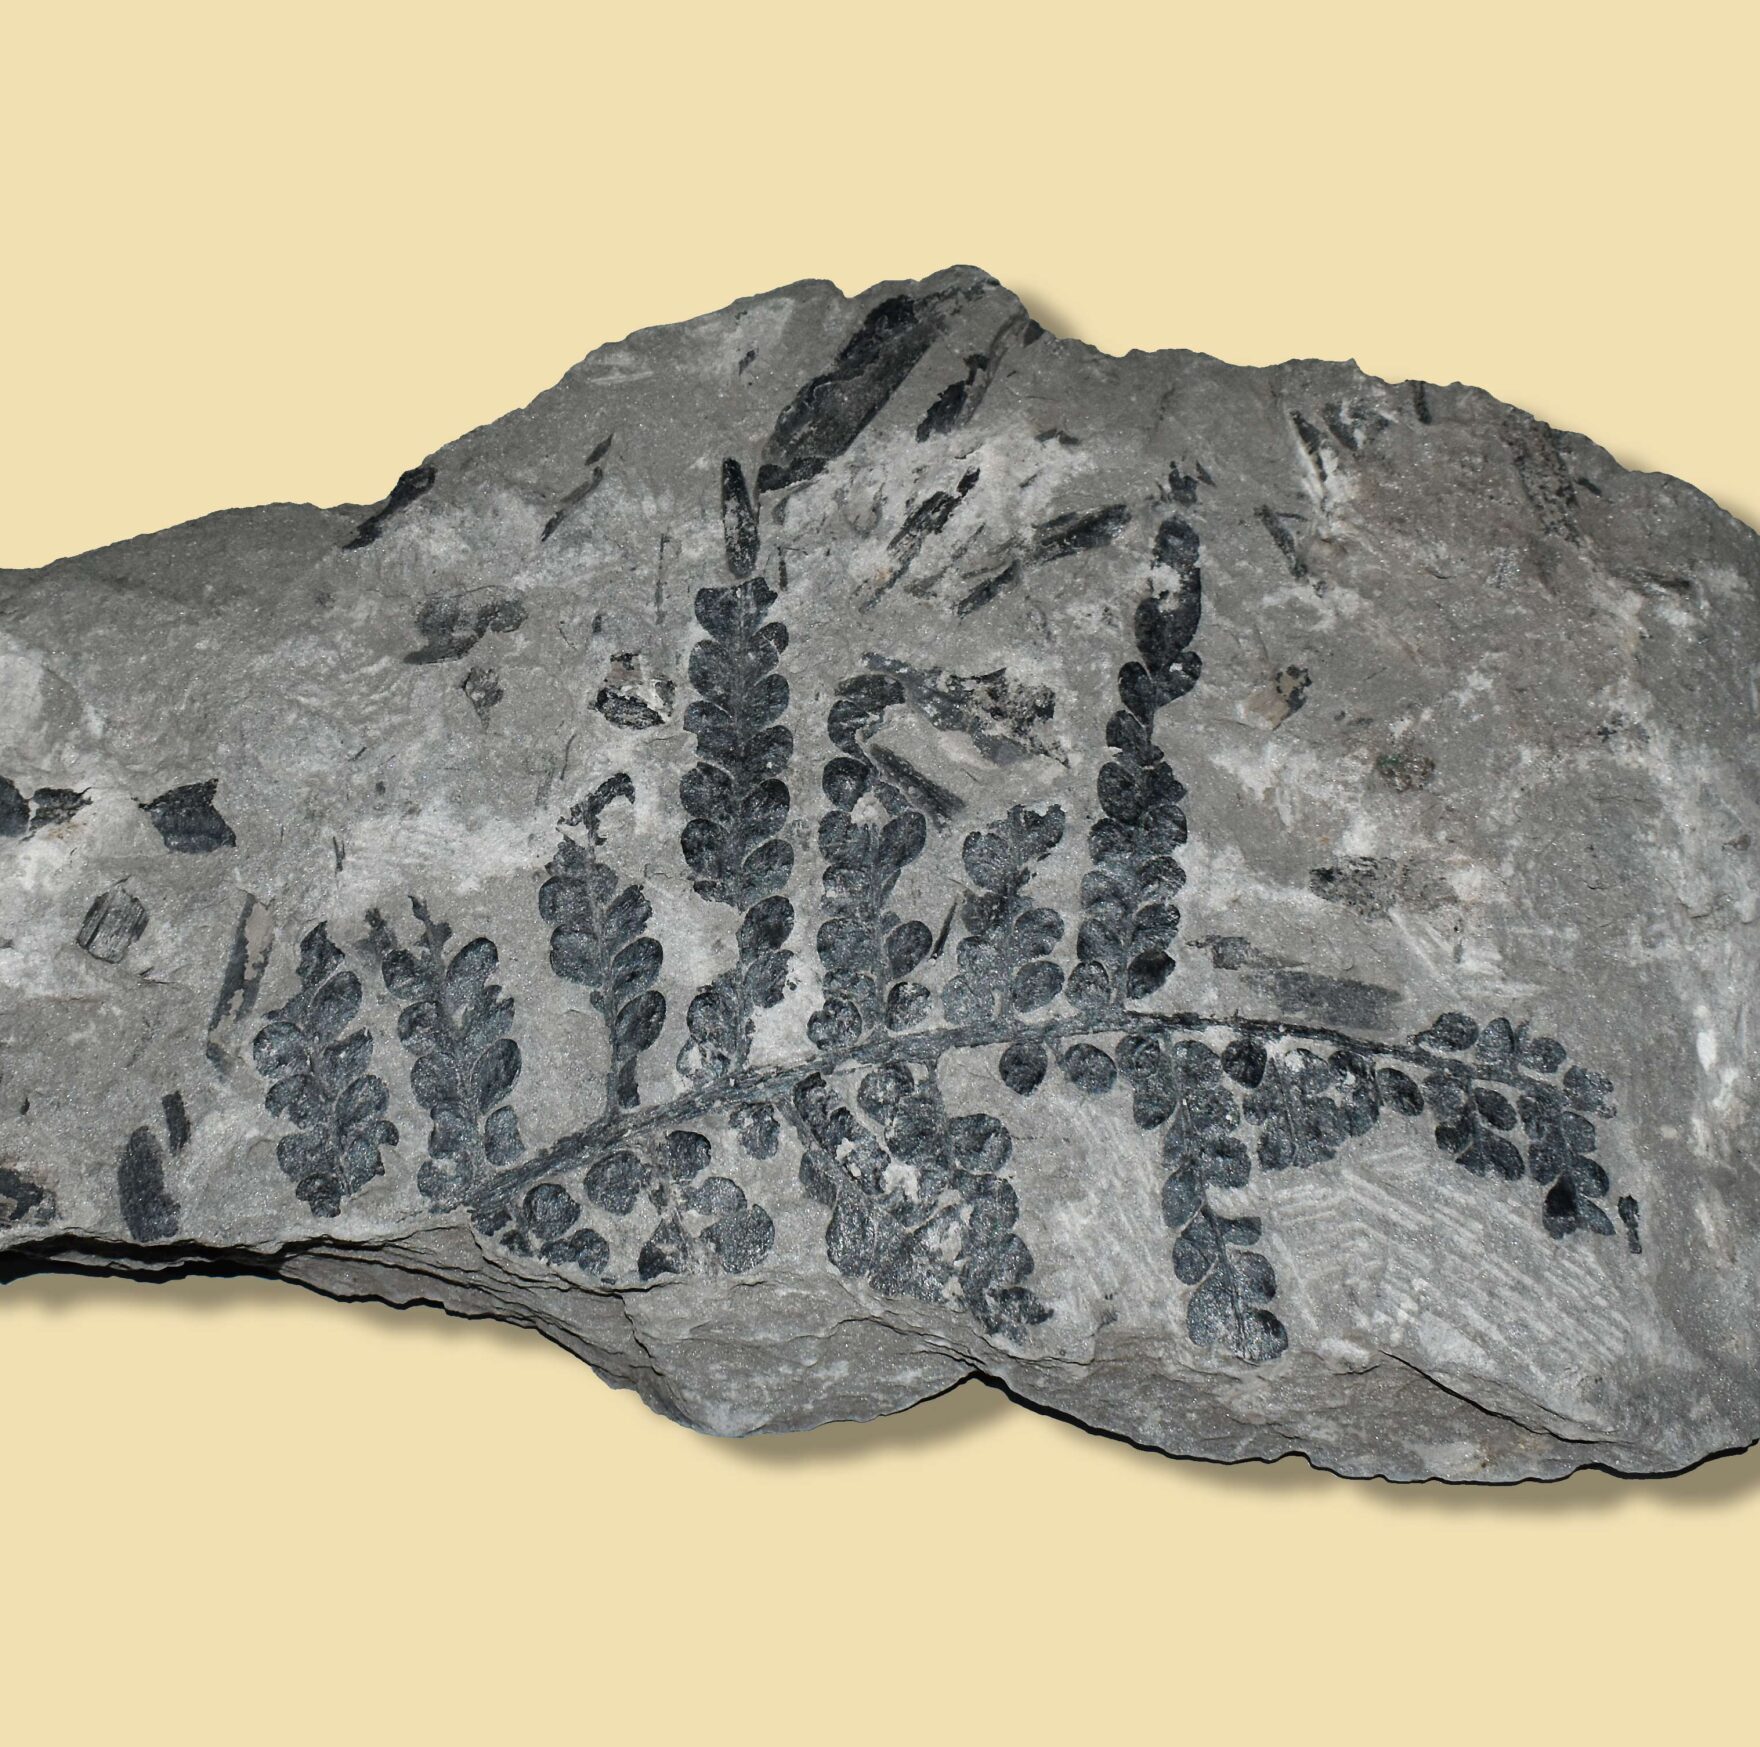 Fossile du Musée Vetter